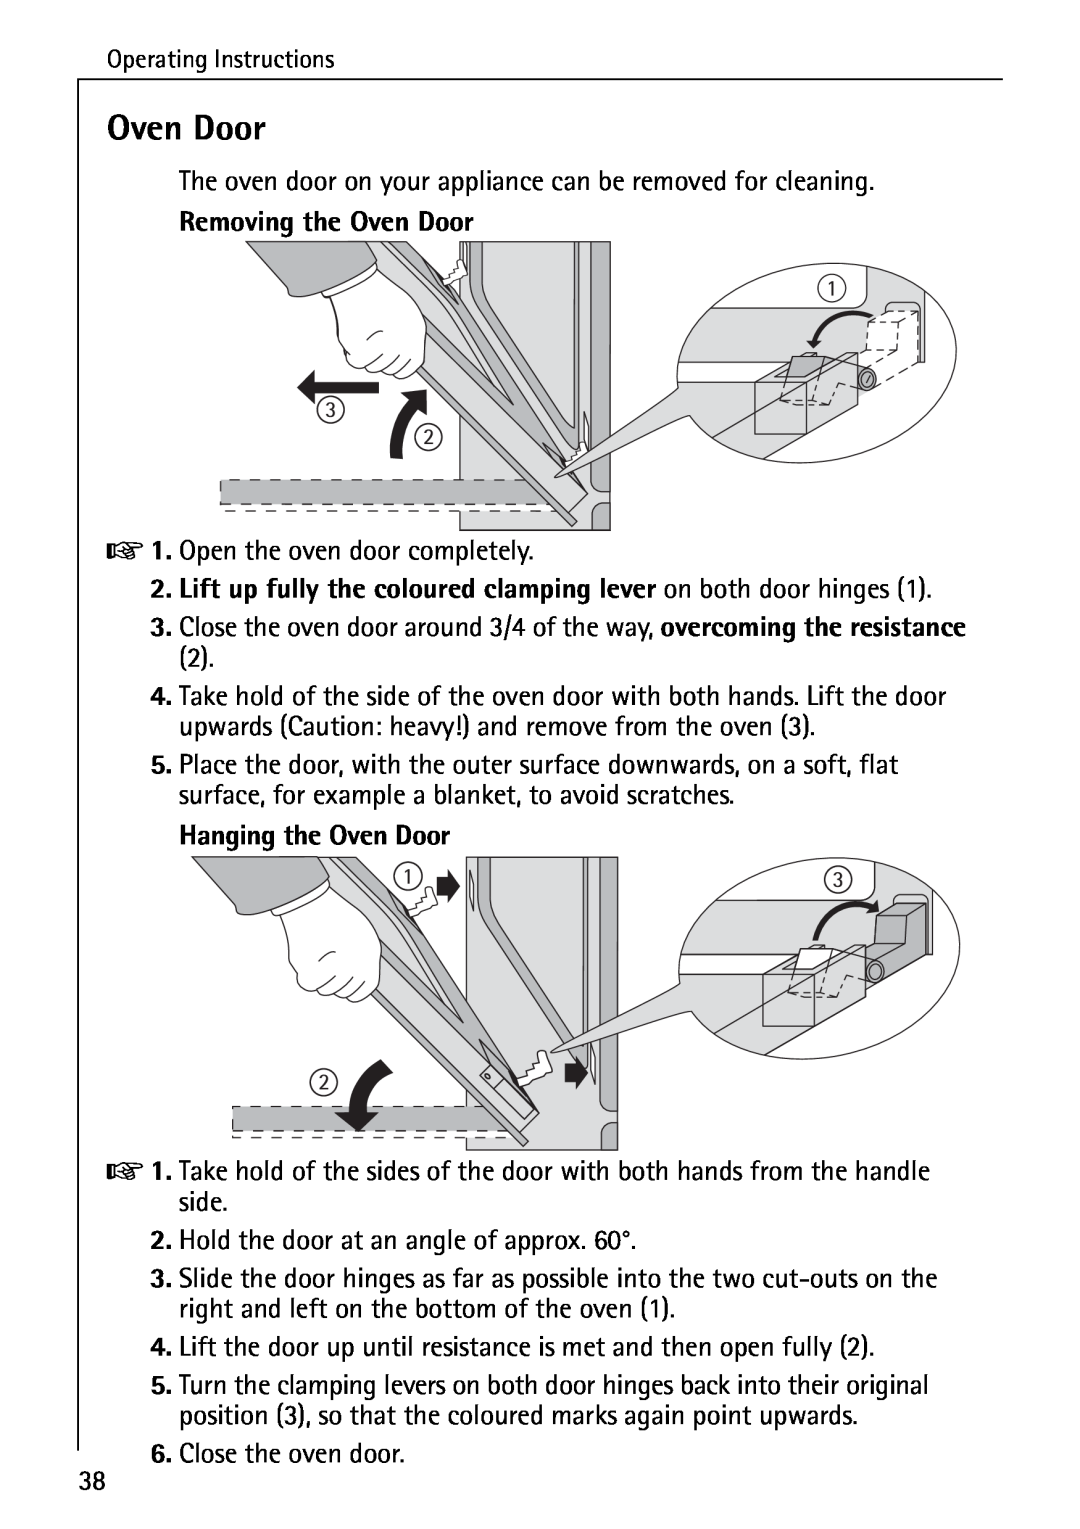 AEG B 2100 operating instructions Removing the Oven Door, Hanging the Oven Door 